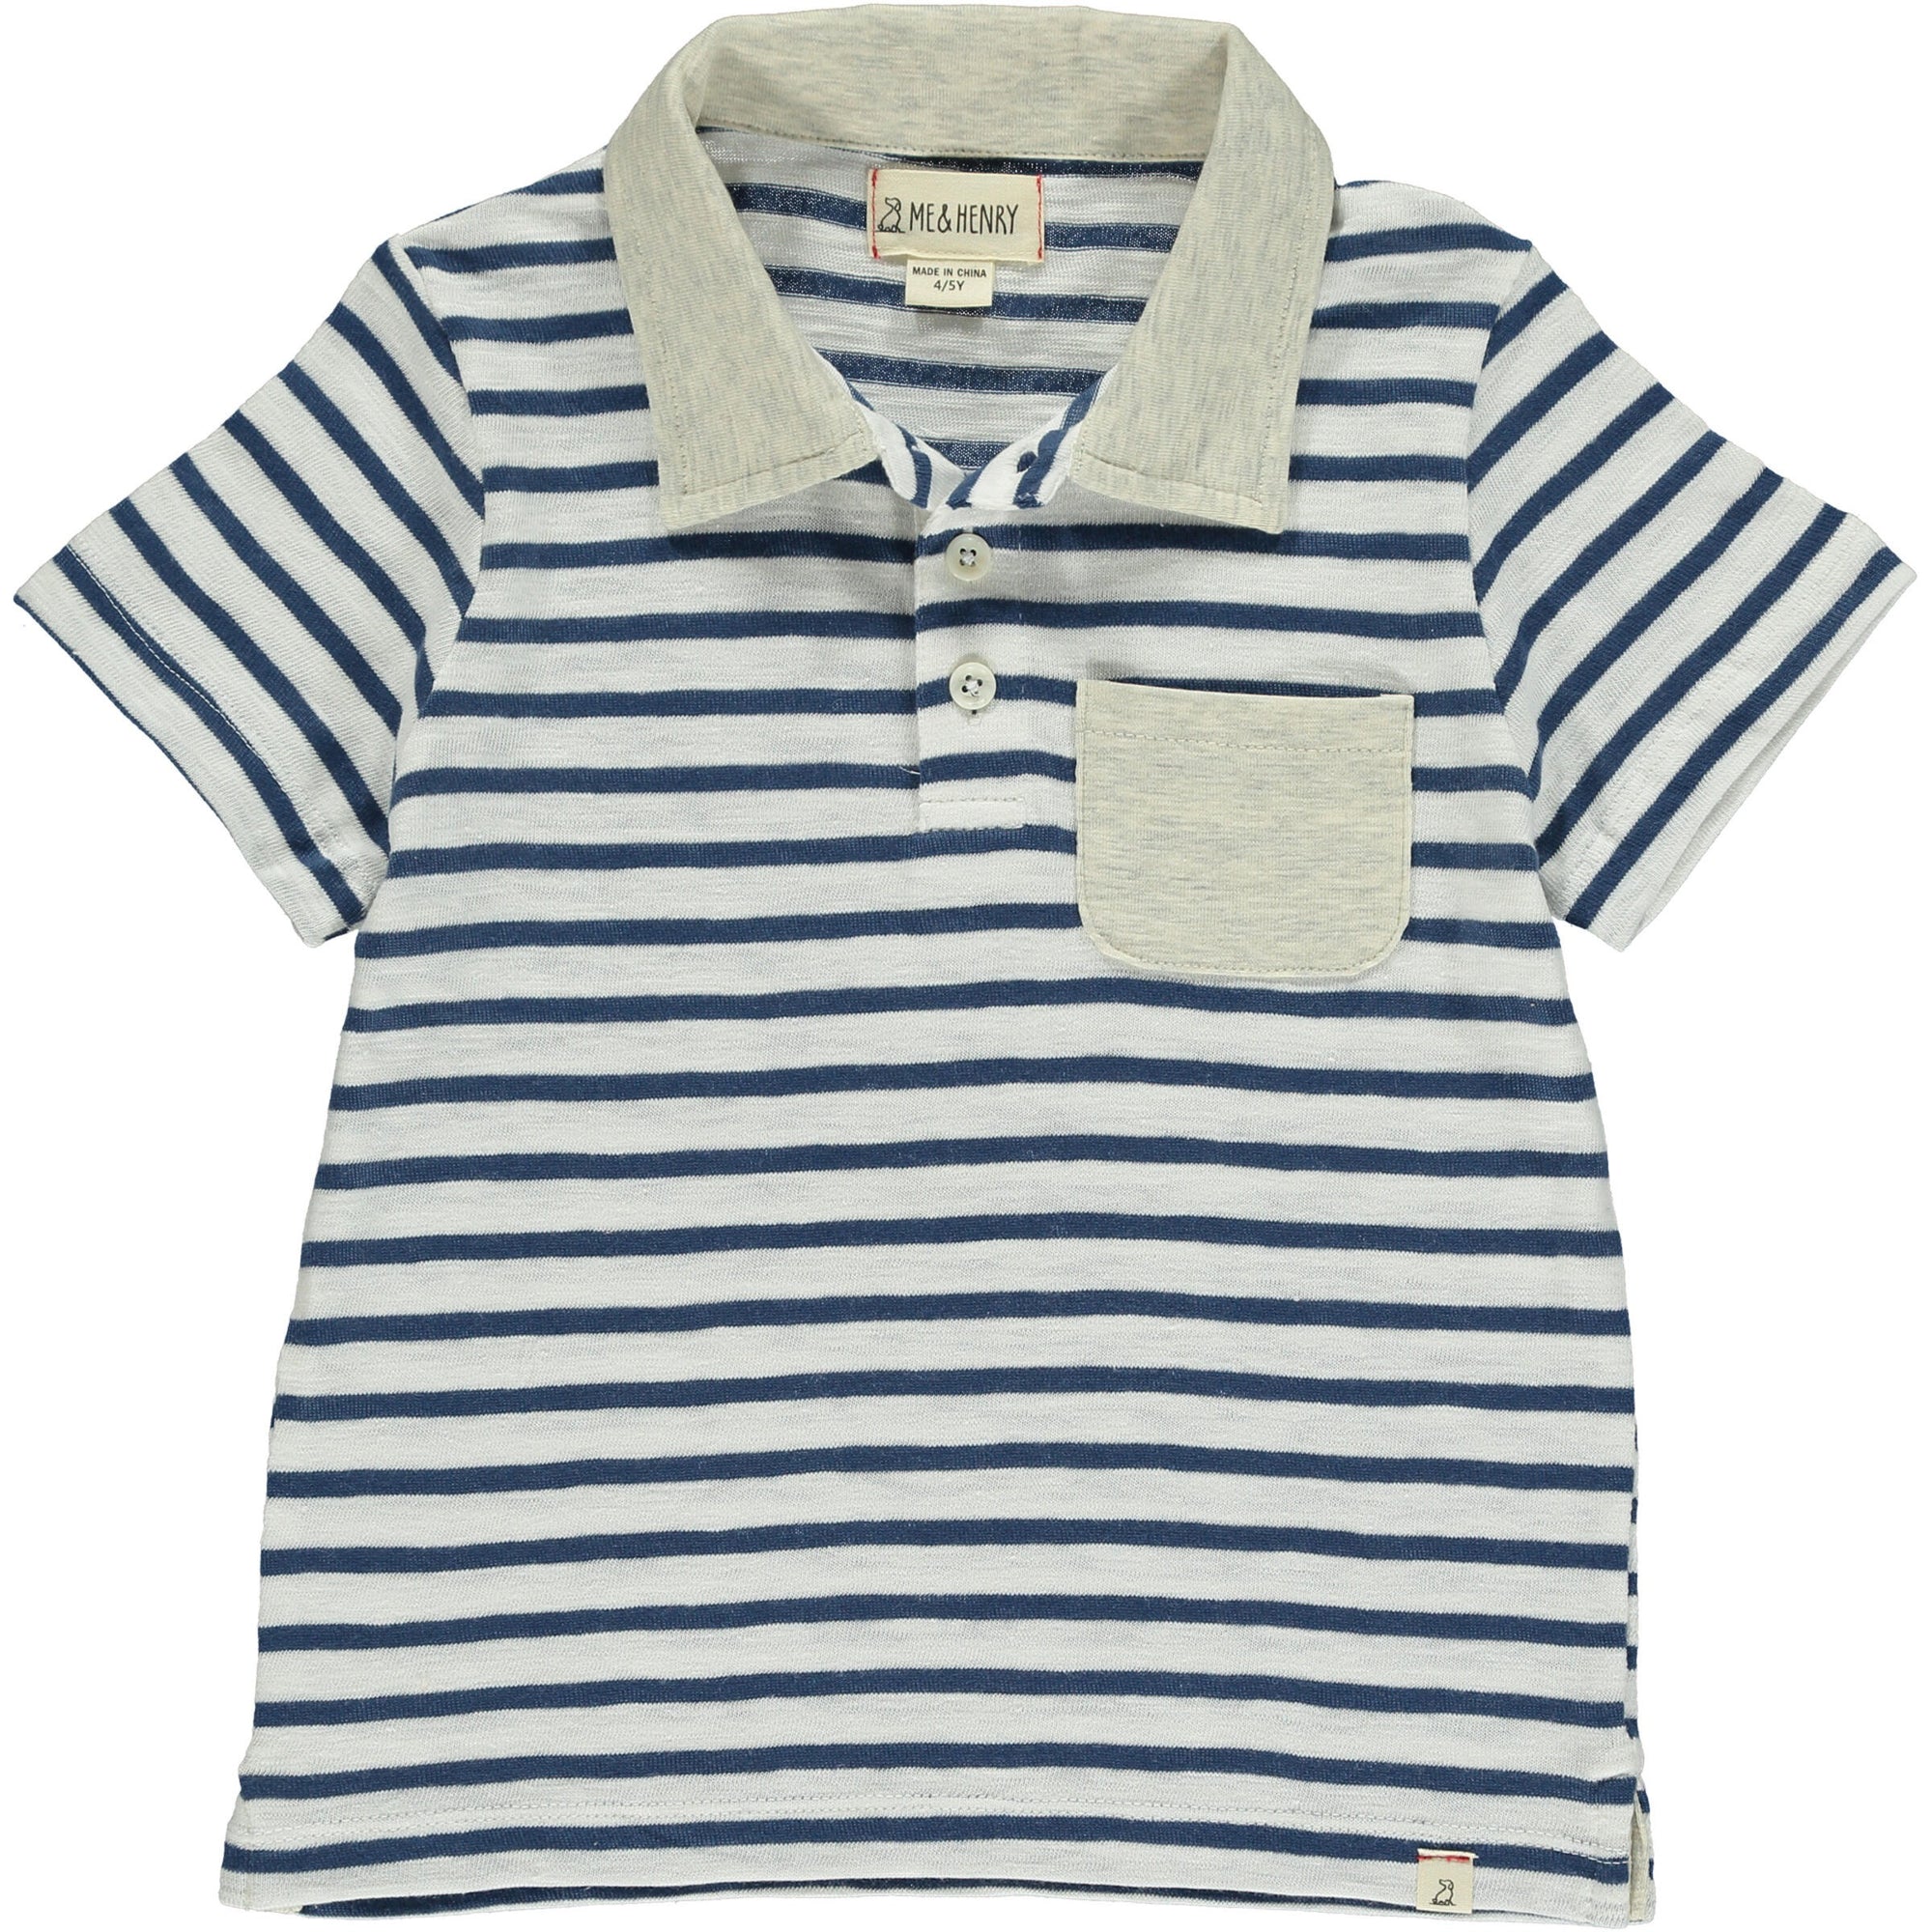 Me & Henry Anchor Polo Shirt / Navy & White Stripe